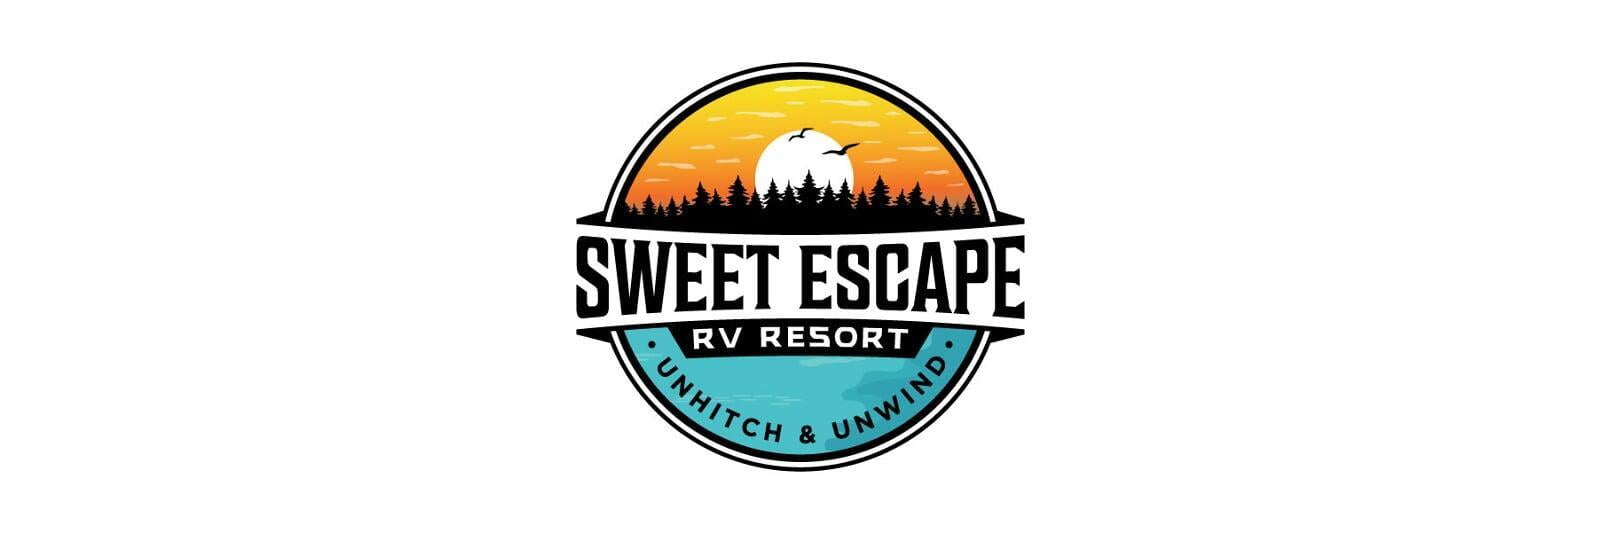 Sweet Escape RV Resort